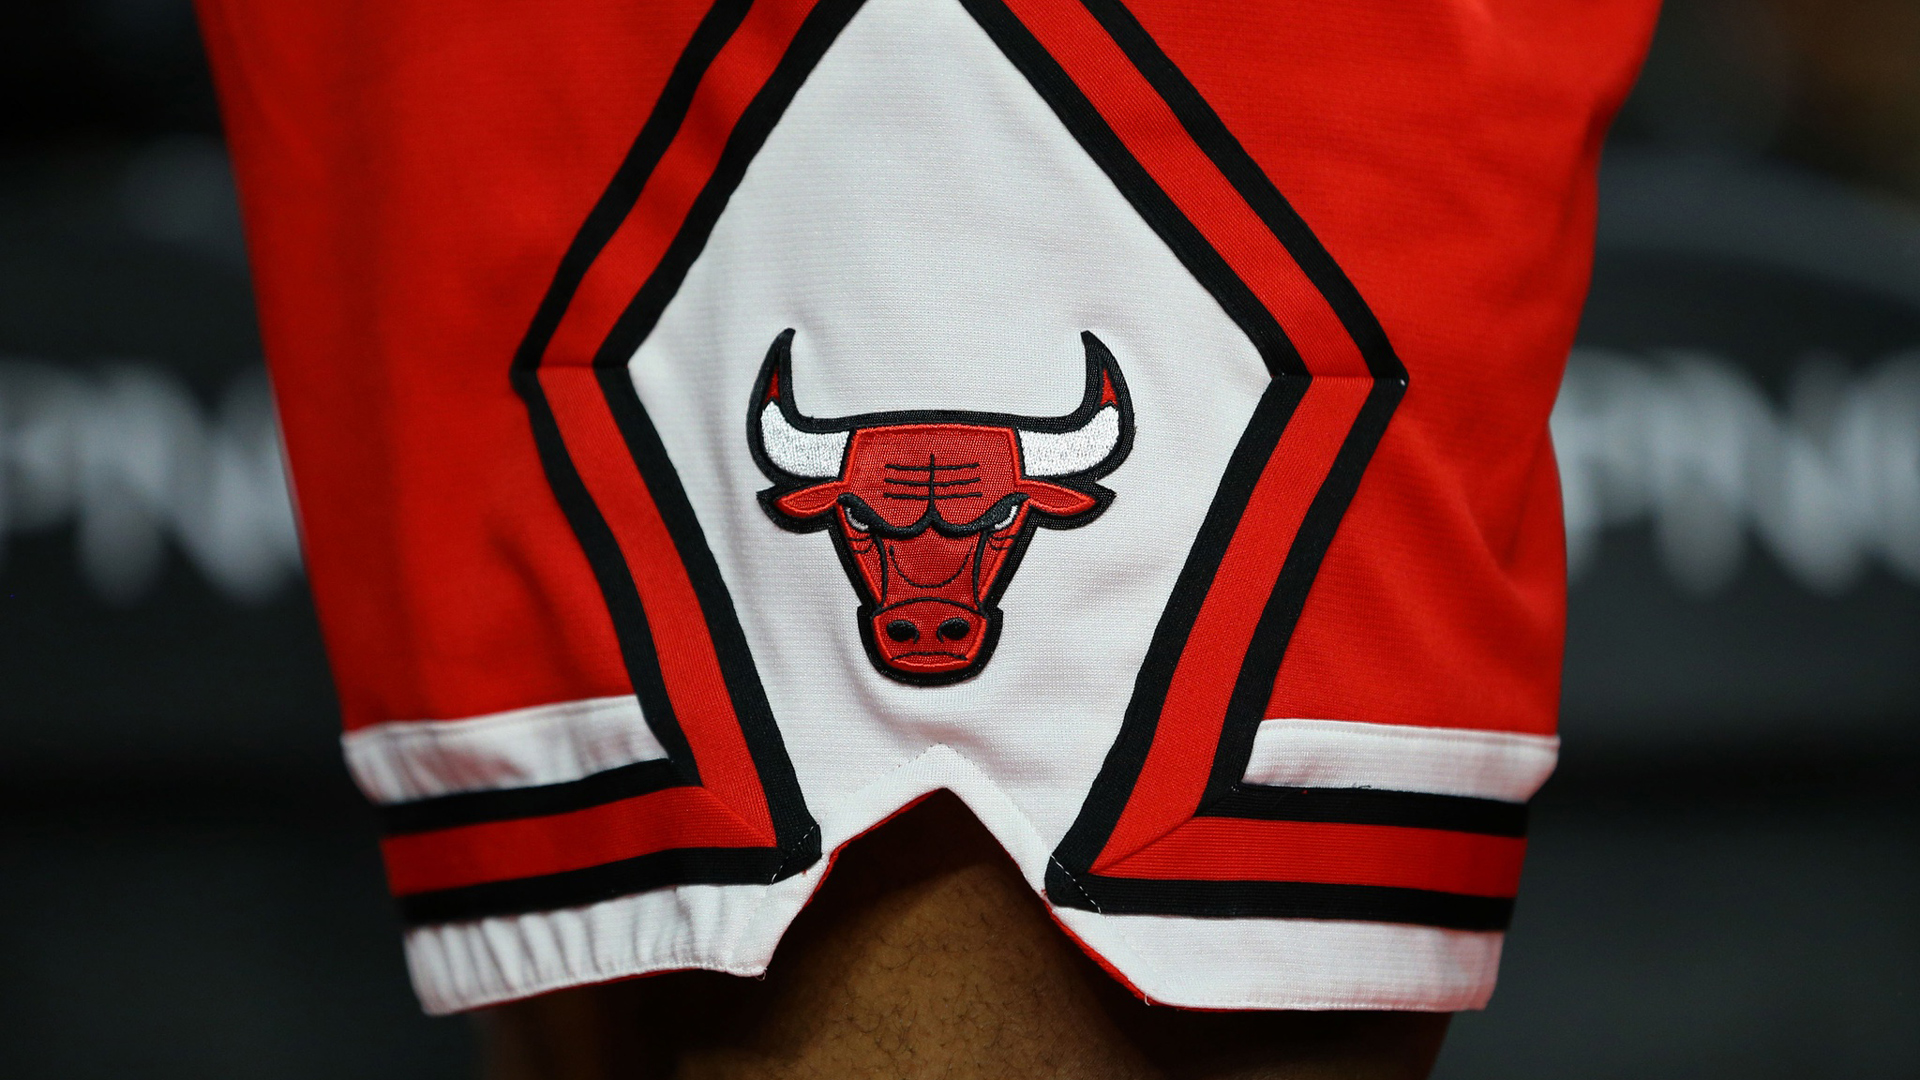 60 Chicago bullz ideas  chicago bulls, chicago, da bulls